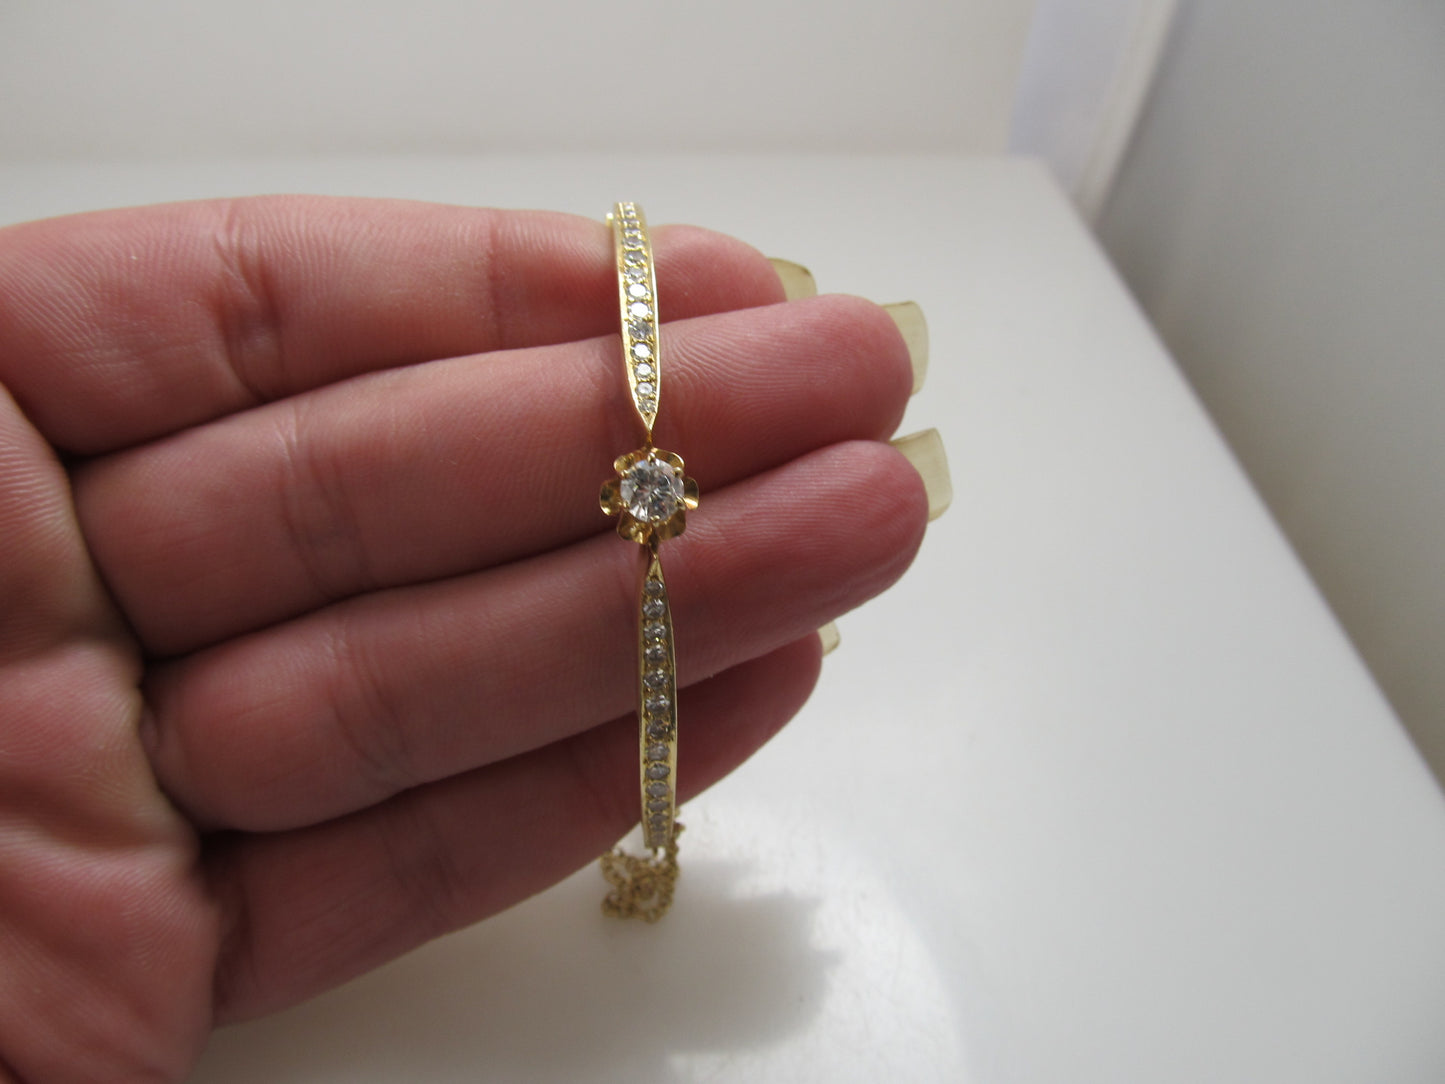 Antique style 14k yellow gold diamond bangle bracelet